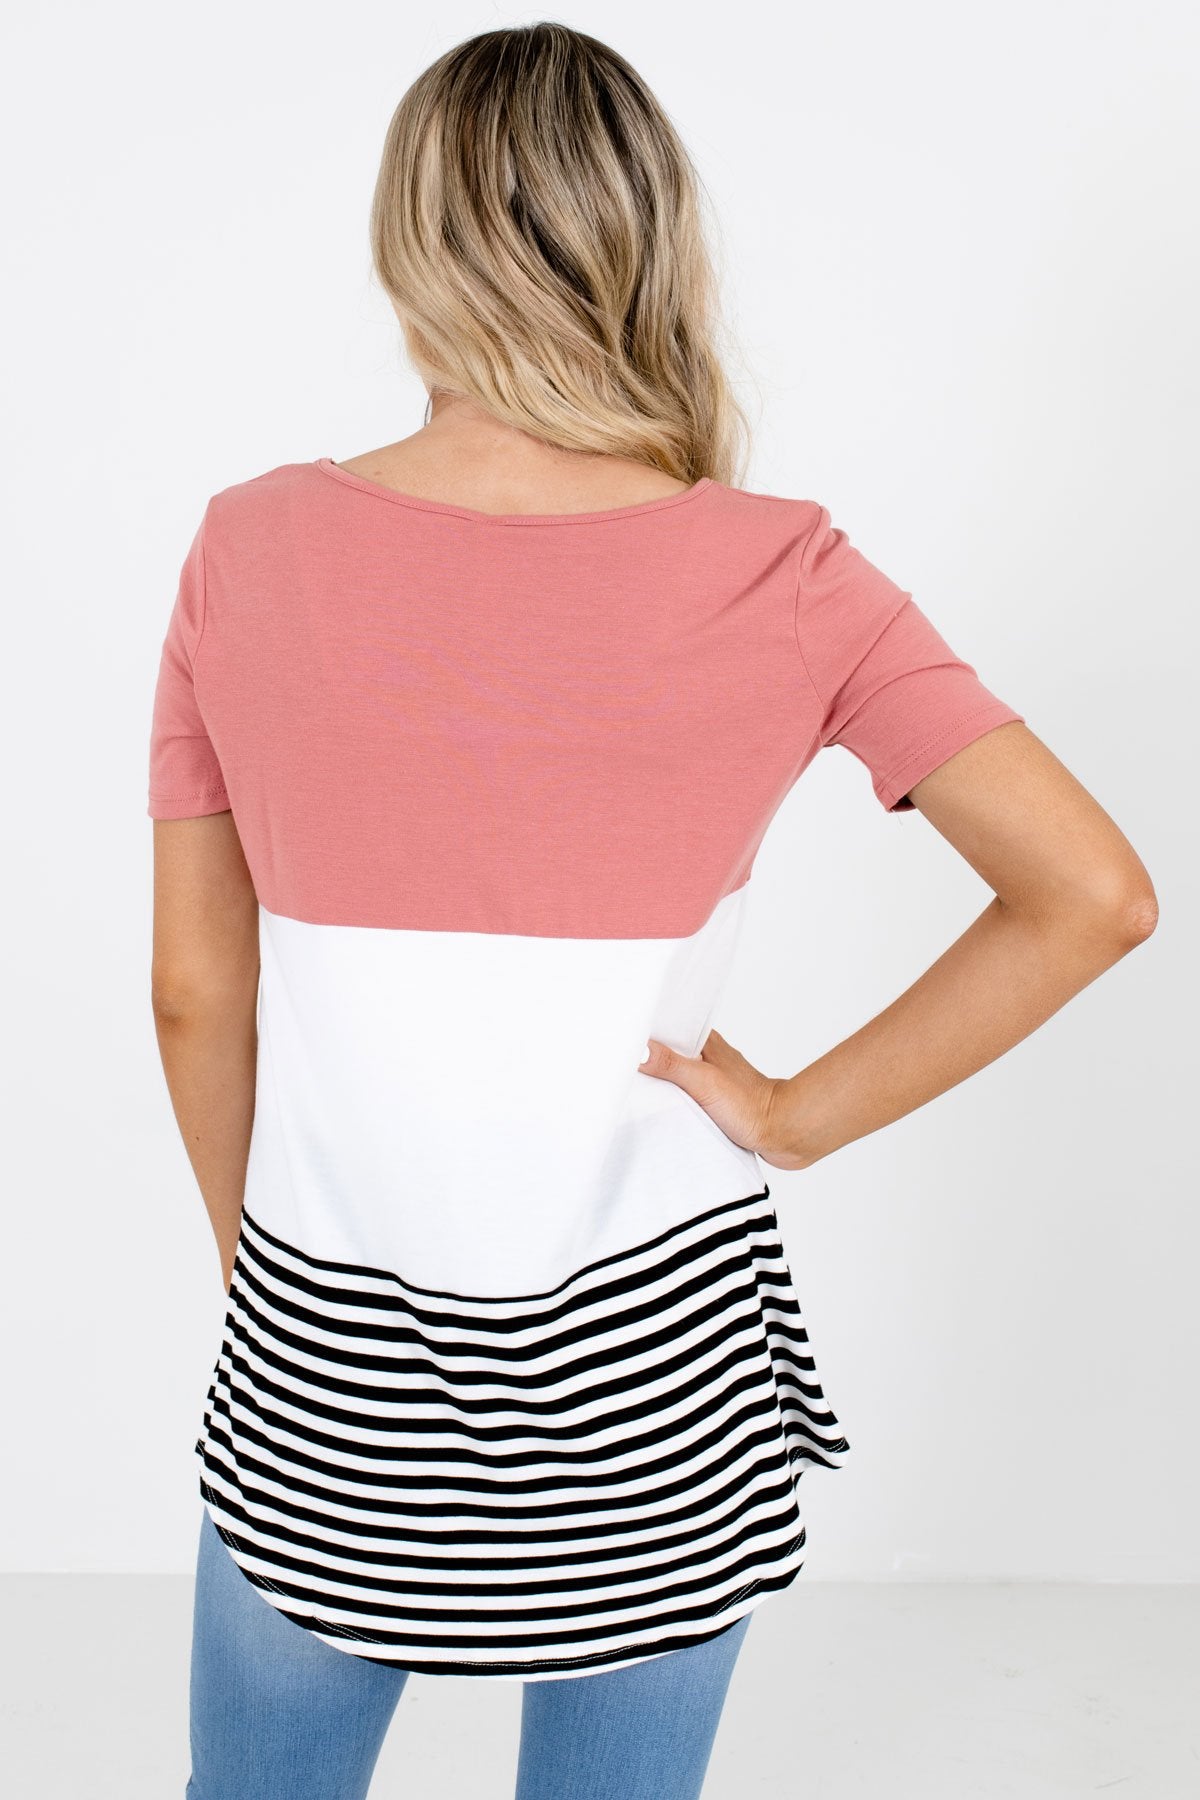 Women’s Pink Stripe Patterned Boutique Top